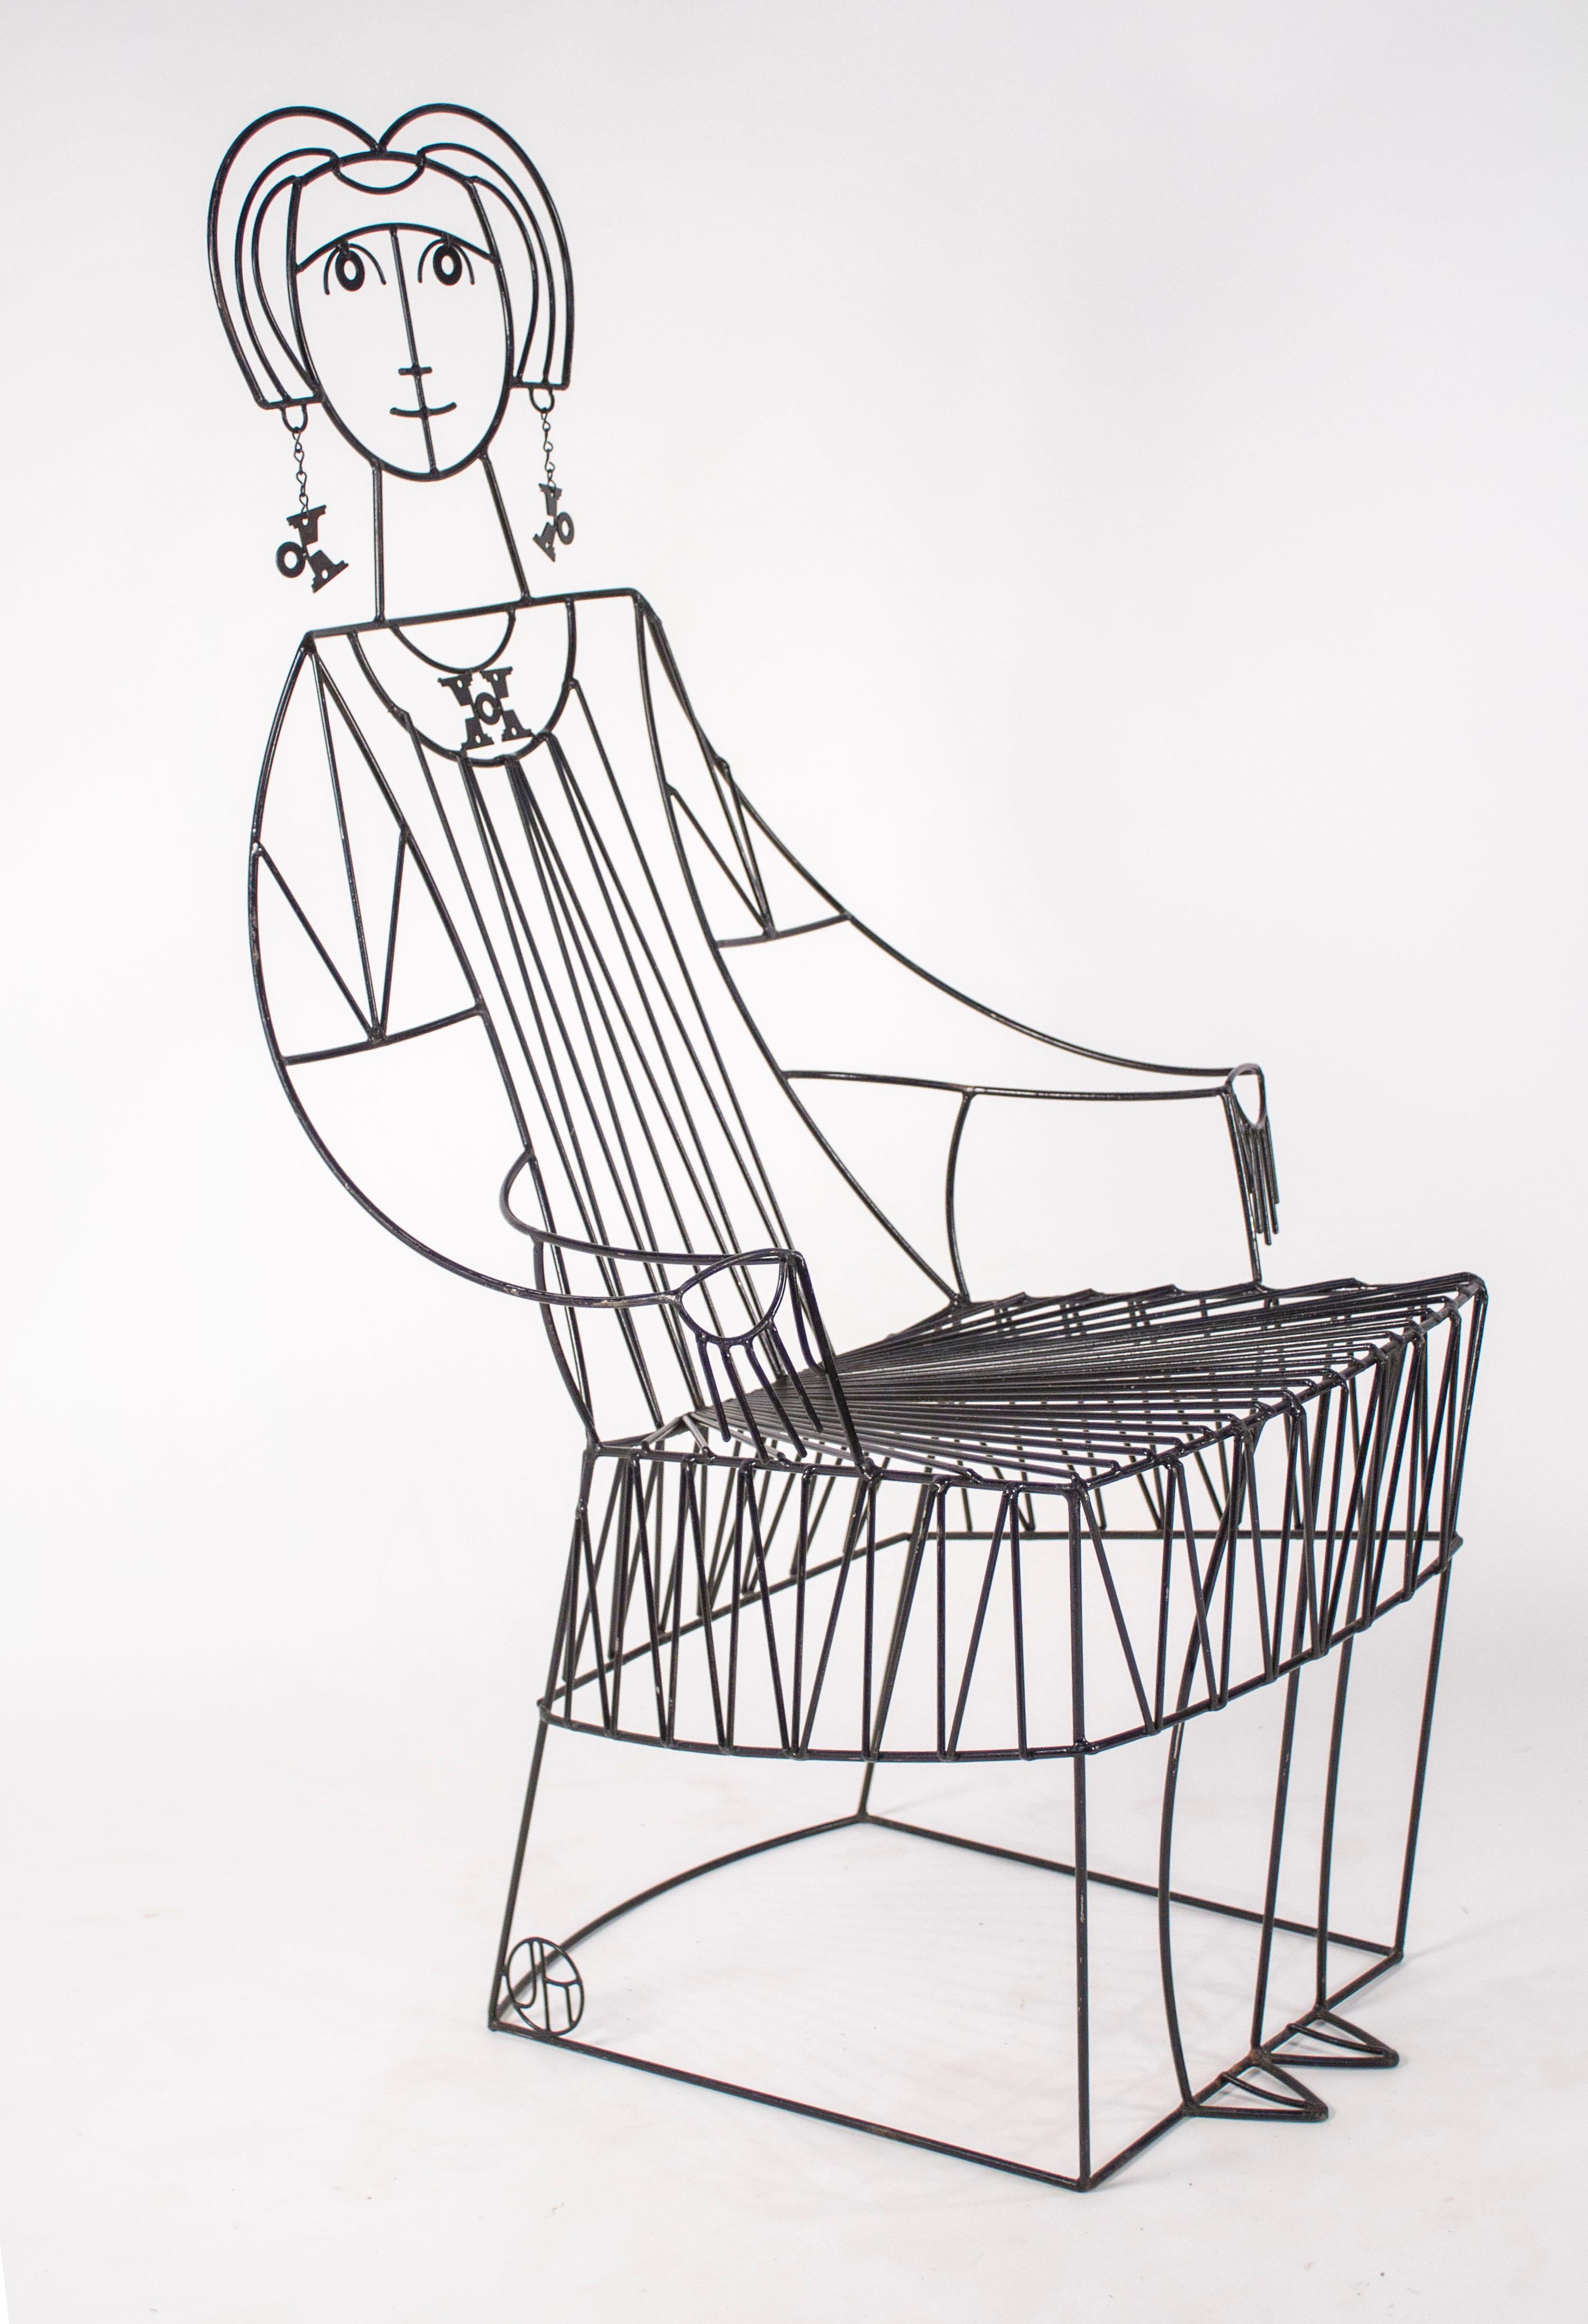 Welded Pair of John Risley Lady Chair Sculptures, Handmade, 1960